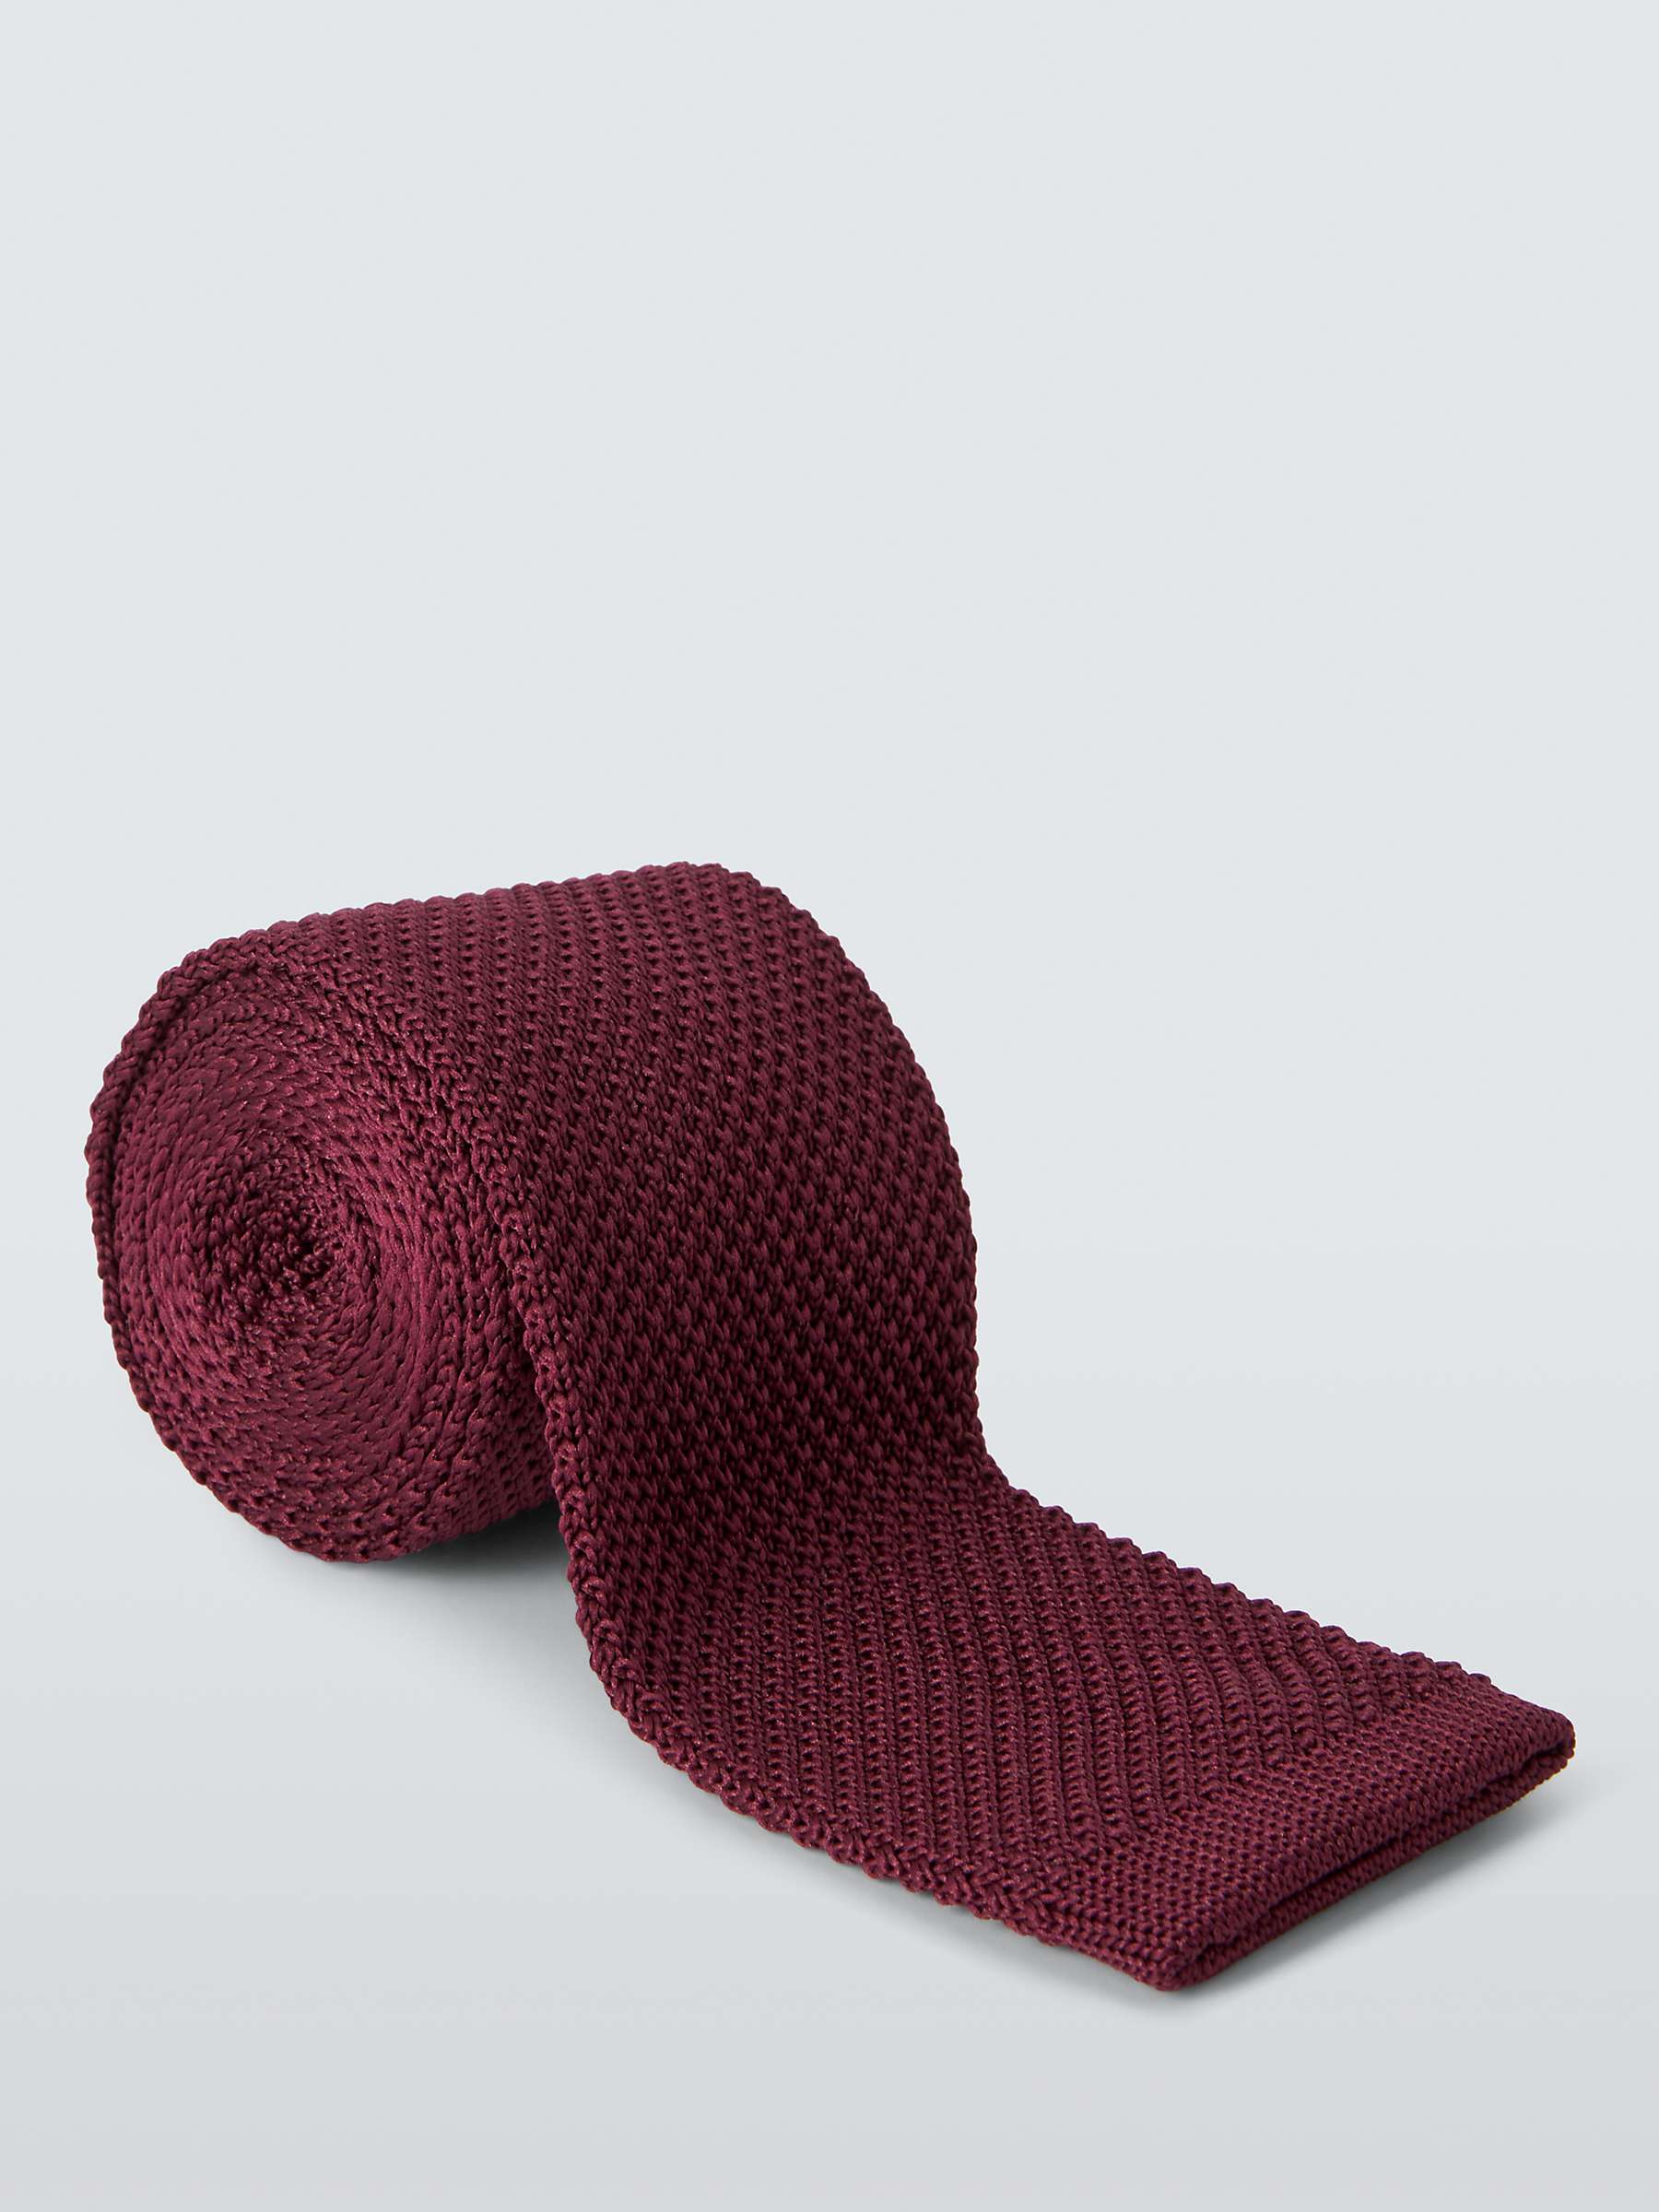 John Lewis Knitted Tie, Red at John Lewis & Partners